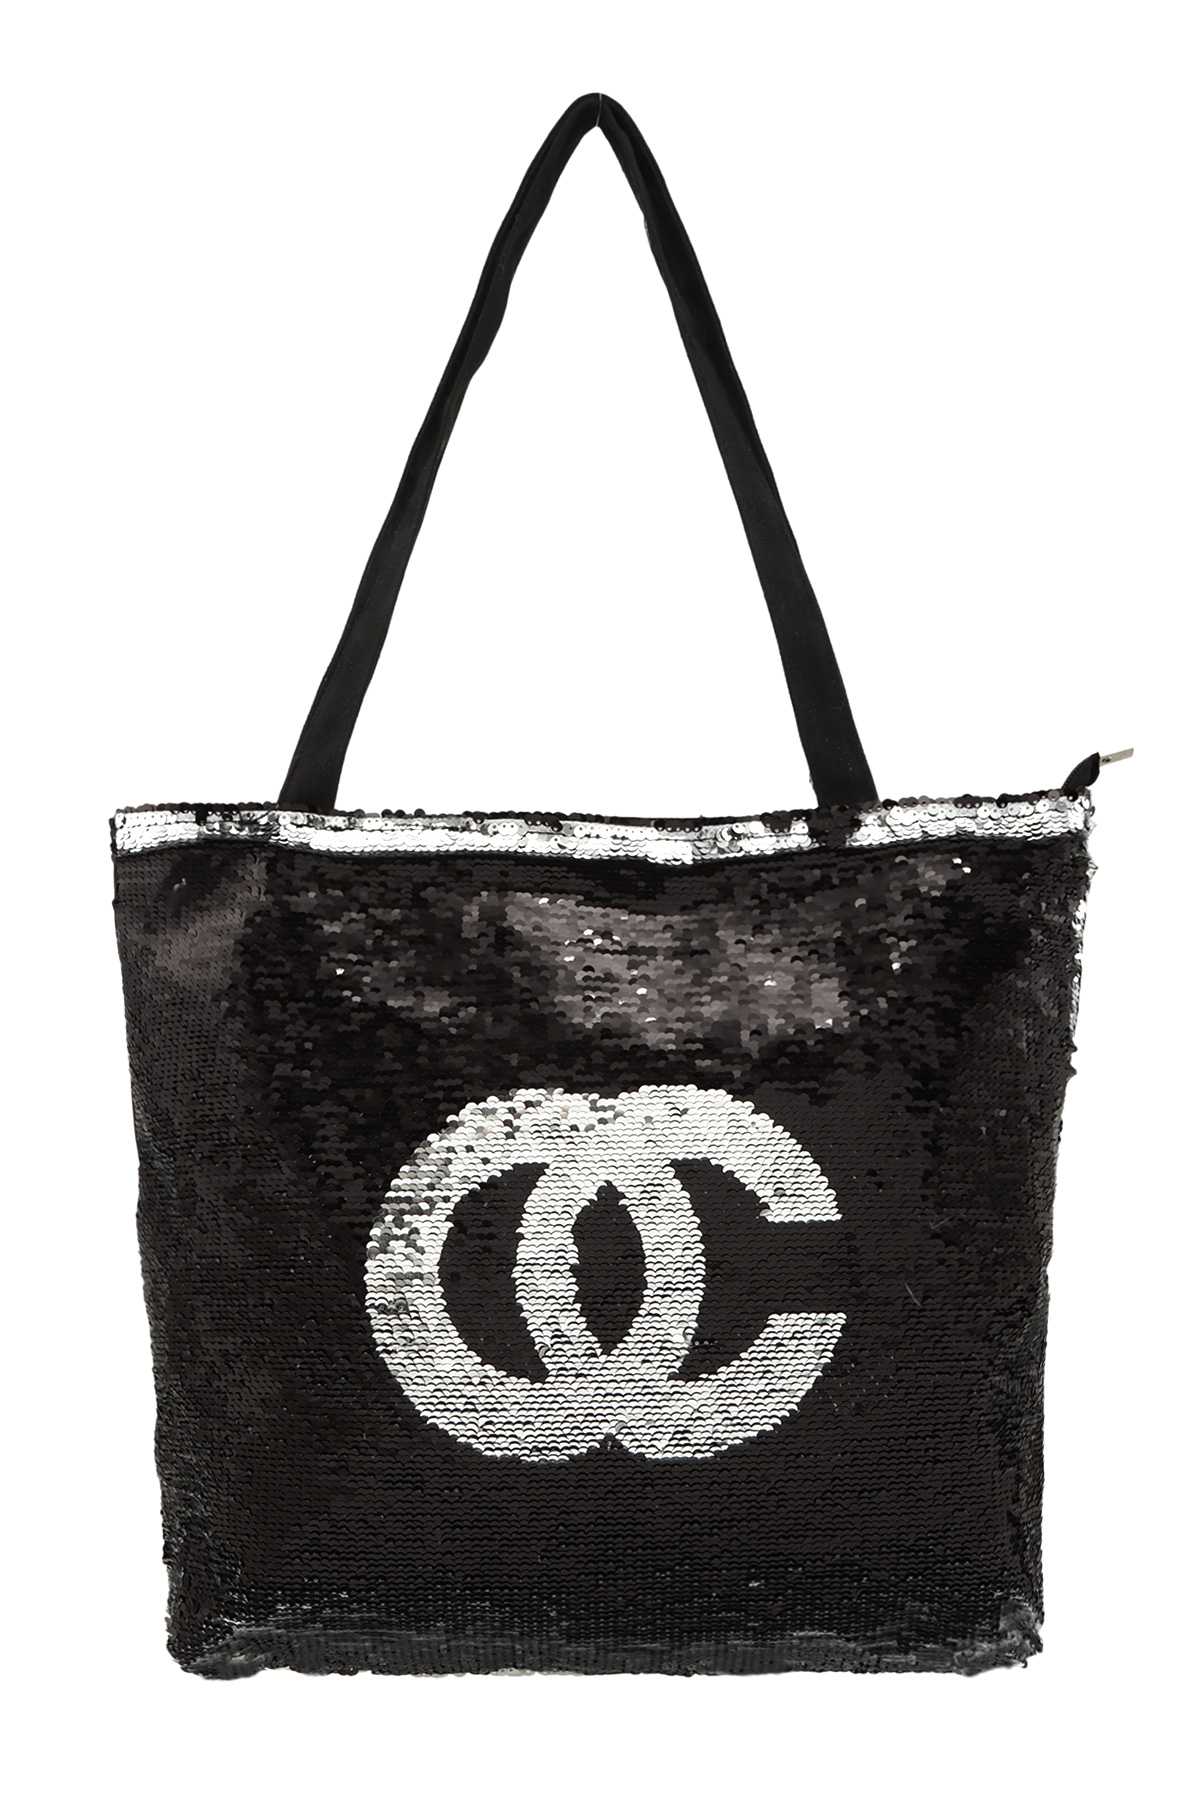 OC Lettering Sparkly Sequins Tote bag